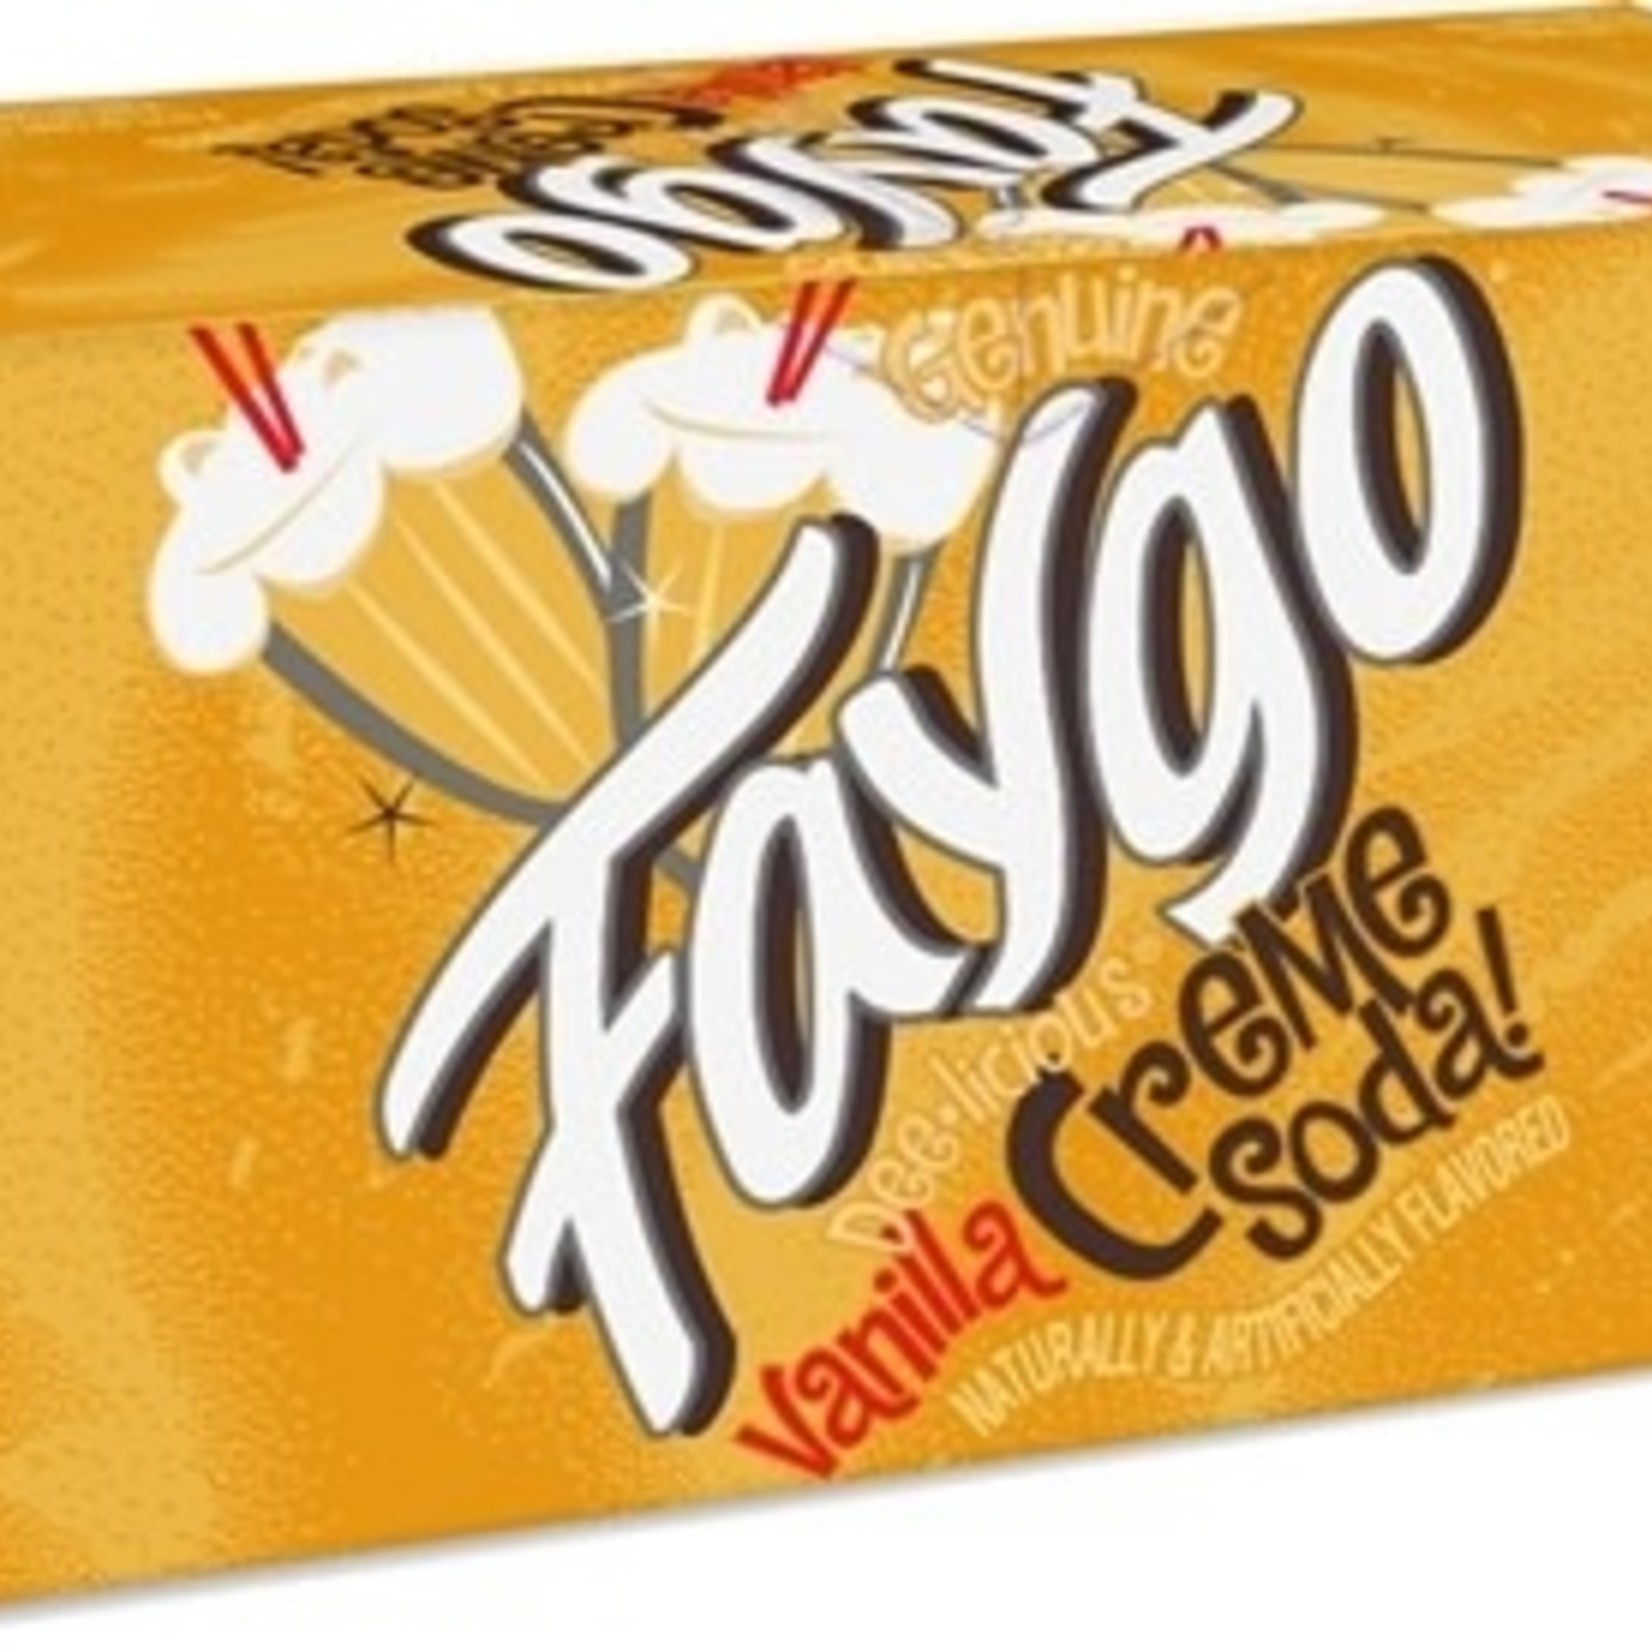 Faygo Soda Pop 8 Pack - Vanilla Creme Soda